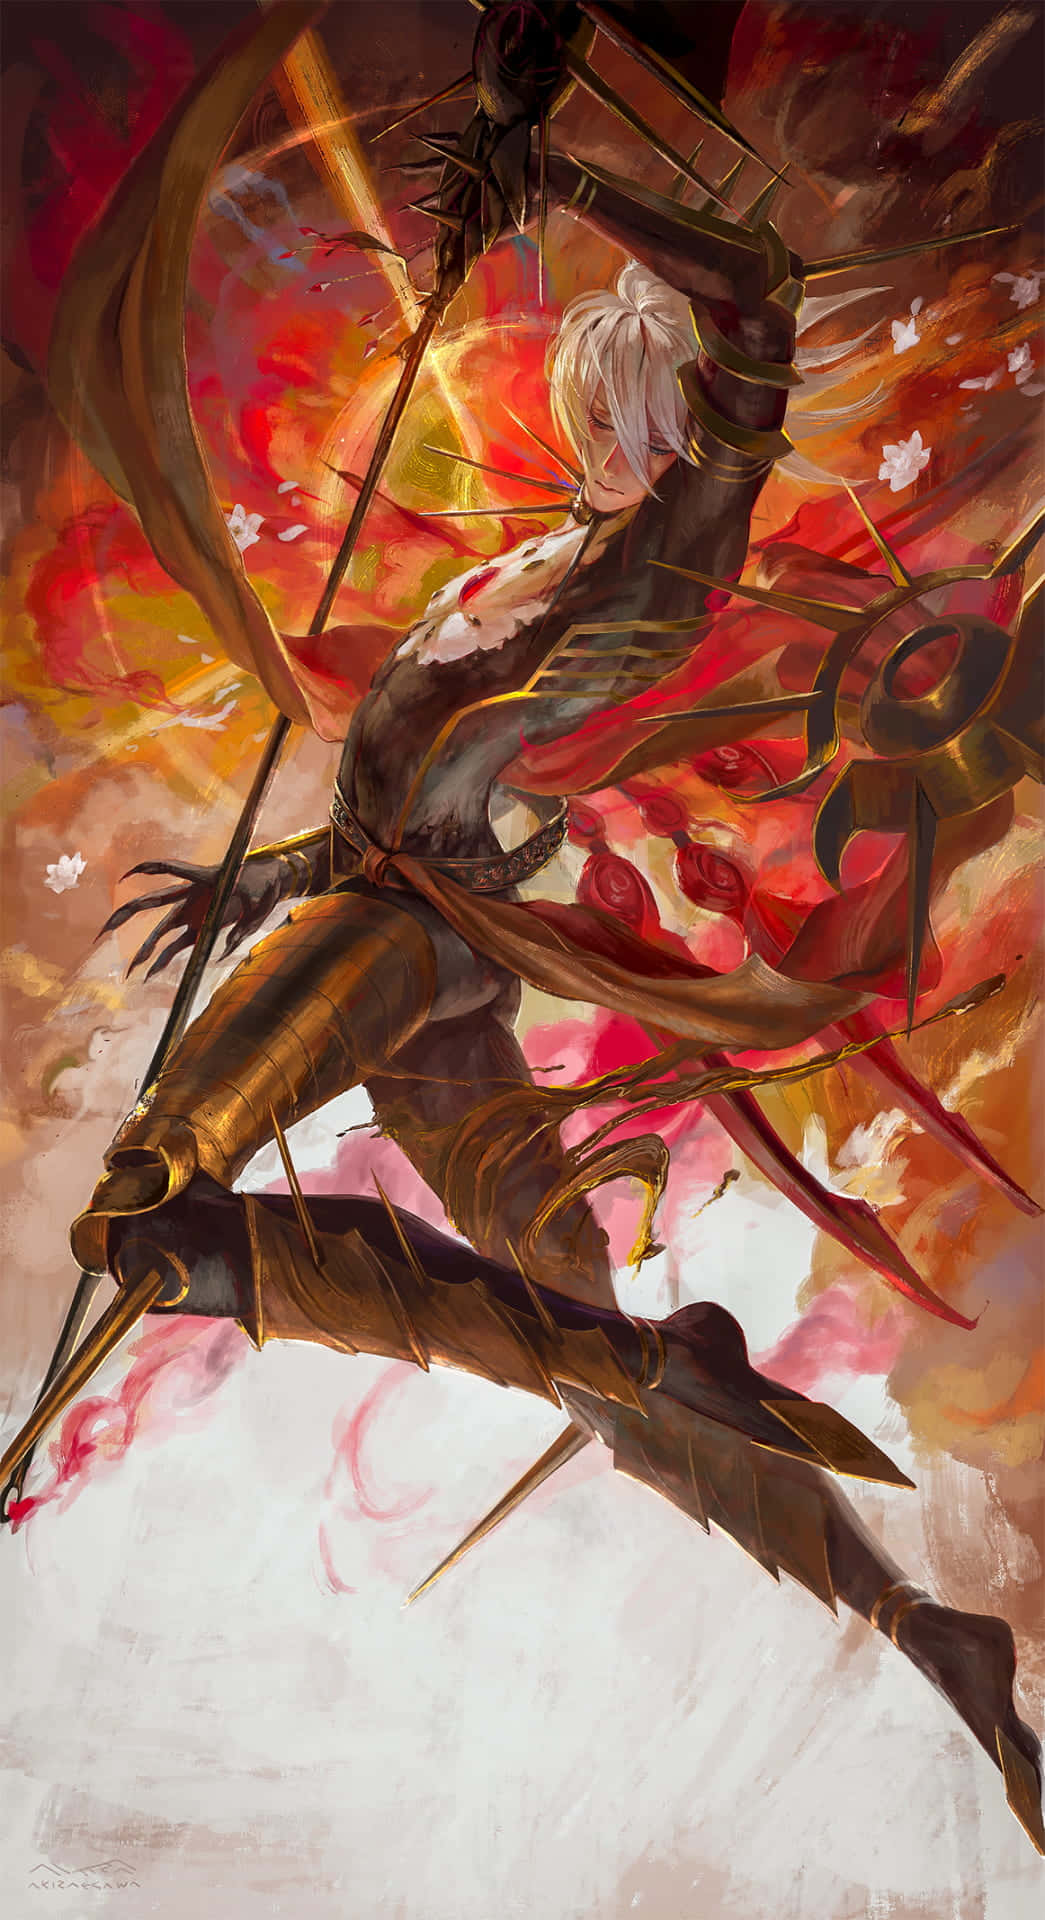 Fate Grand Order - Warrior Karna In Battle Stance Wallpaper